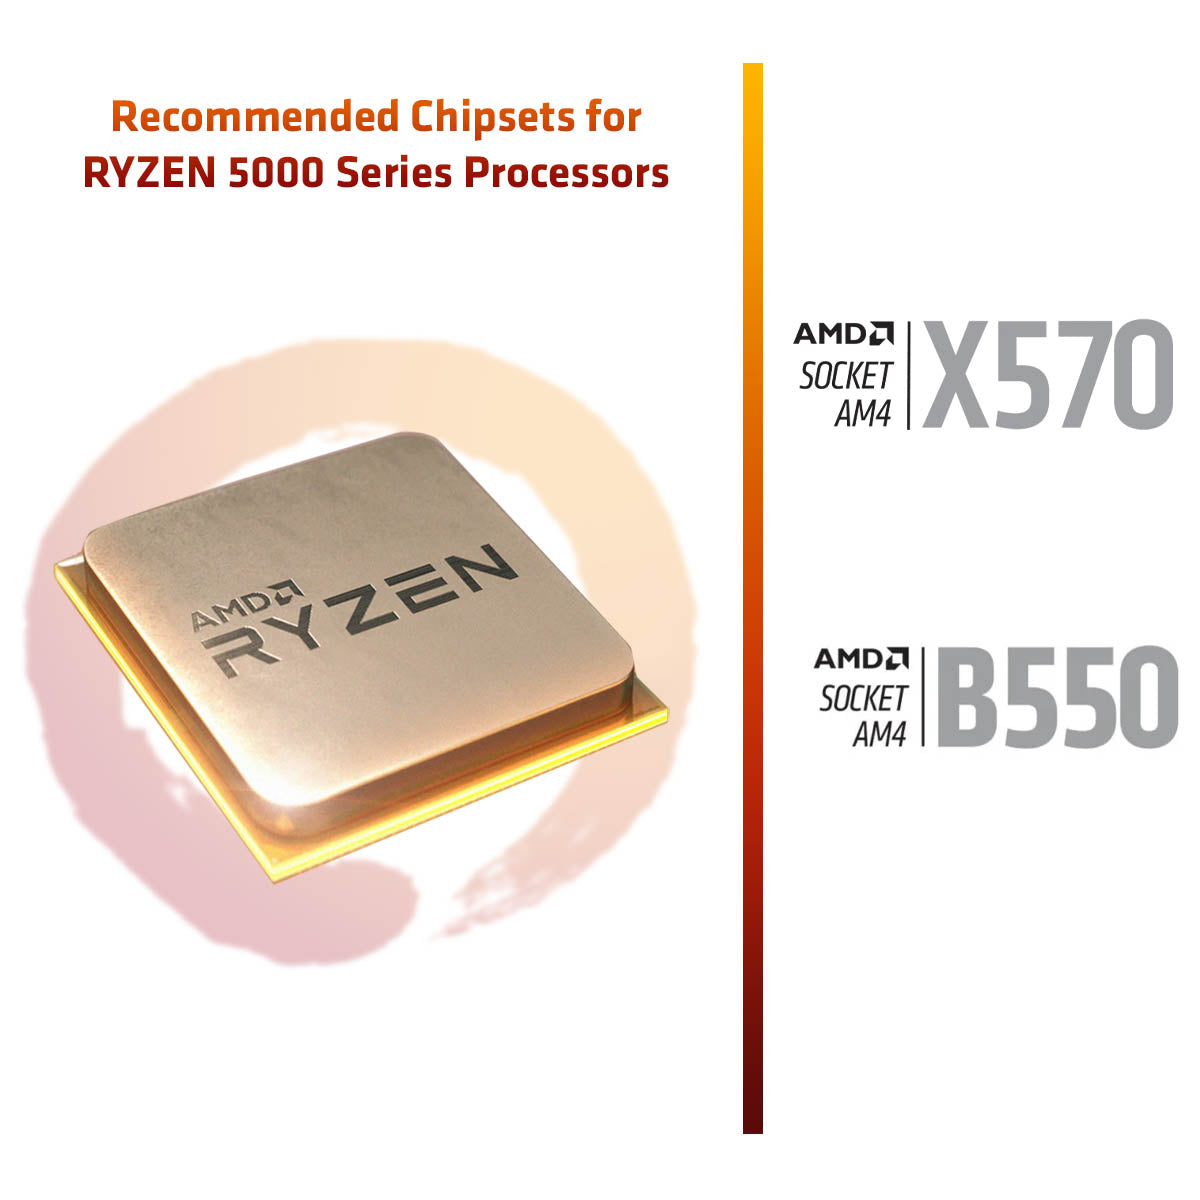 AMD Ryzen 9 5950X डेस्कटॉप प्रोसेसर 16 कोर 4.9GHz तक 72MB कैश AM4 सॉकेट